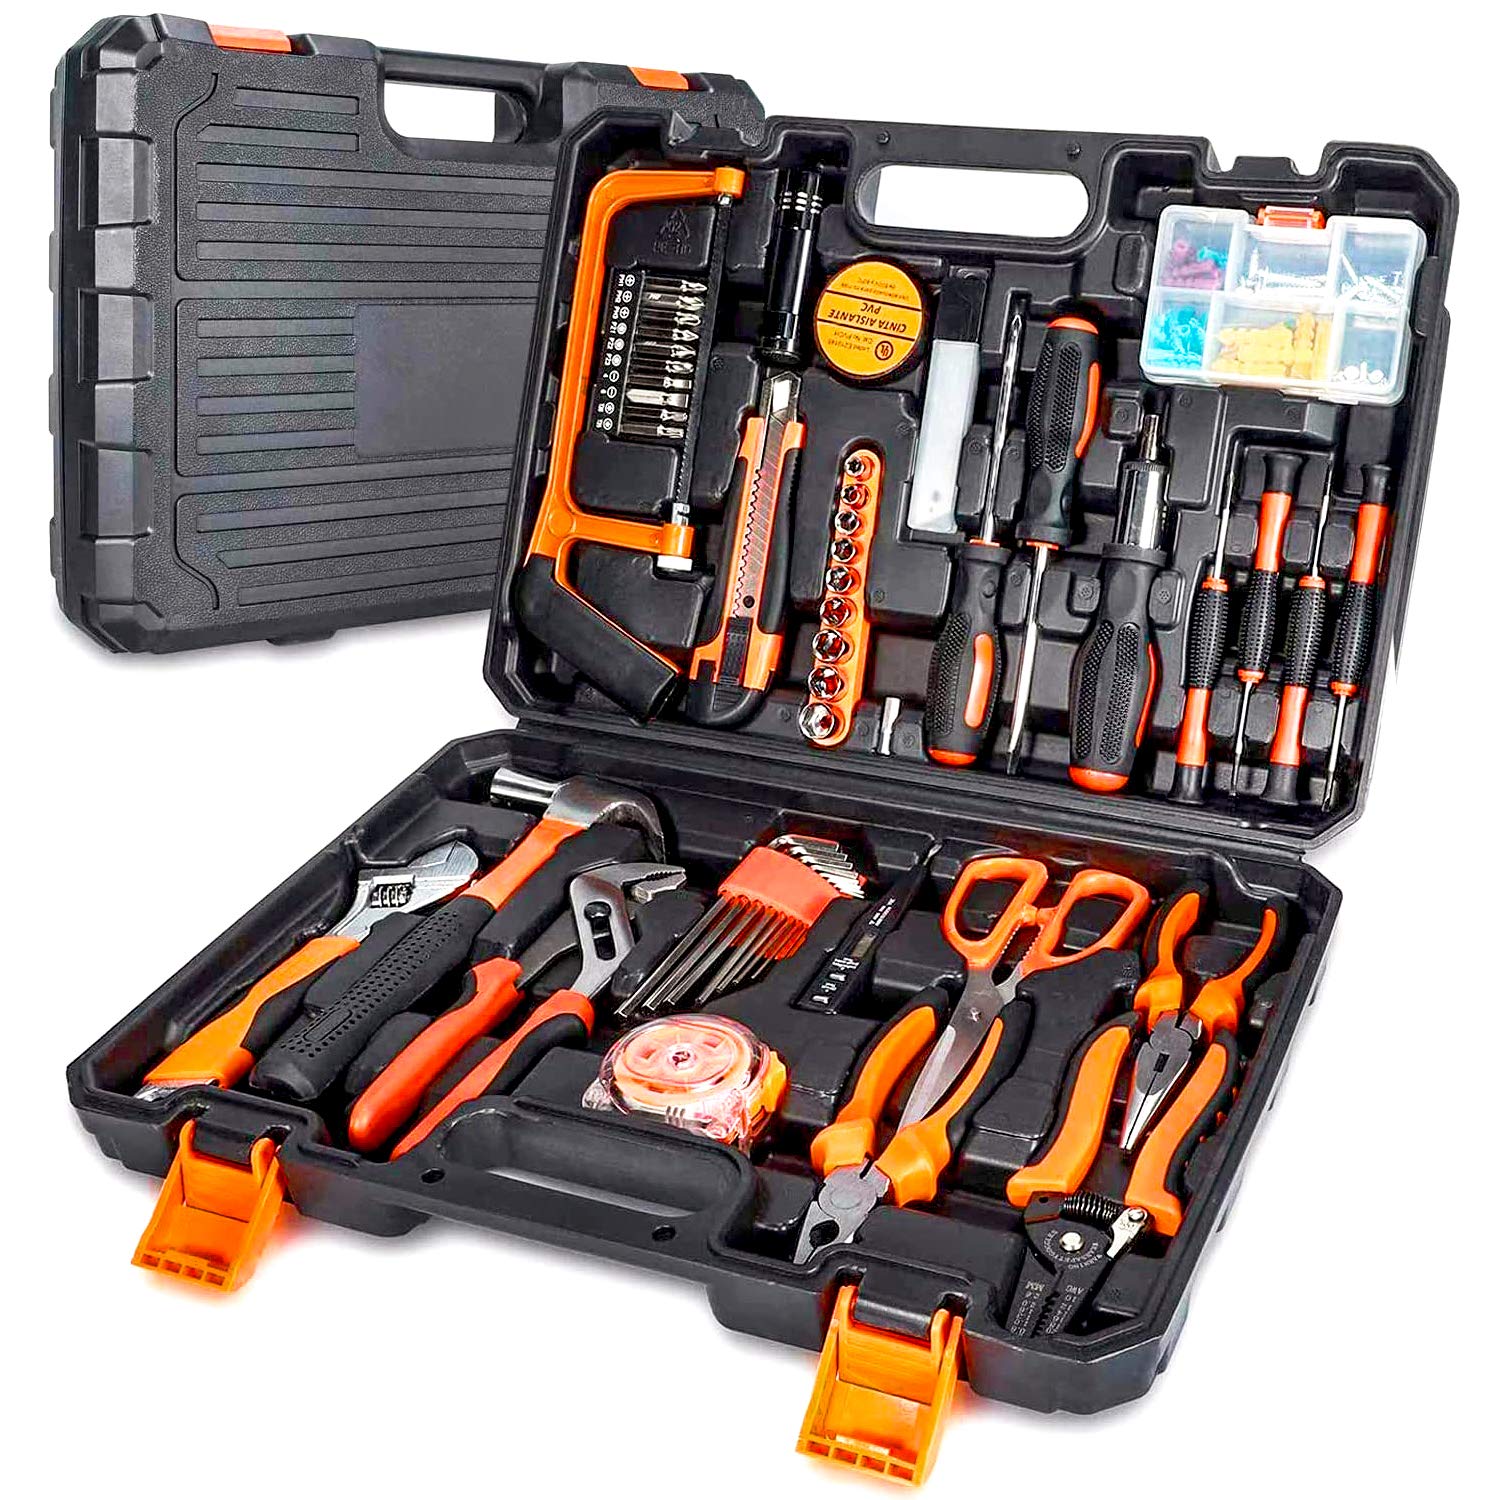 Repairing tools or toolbox